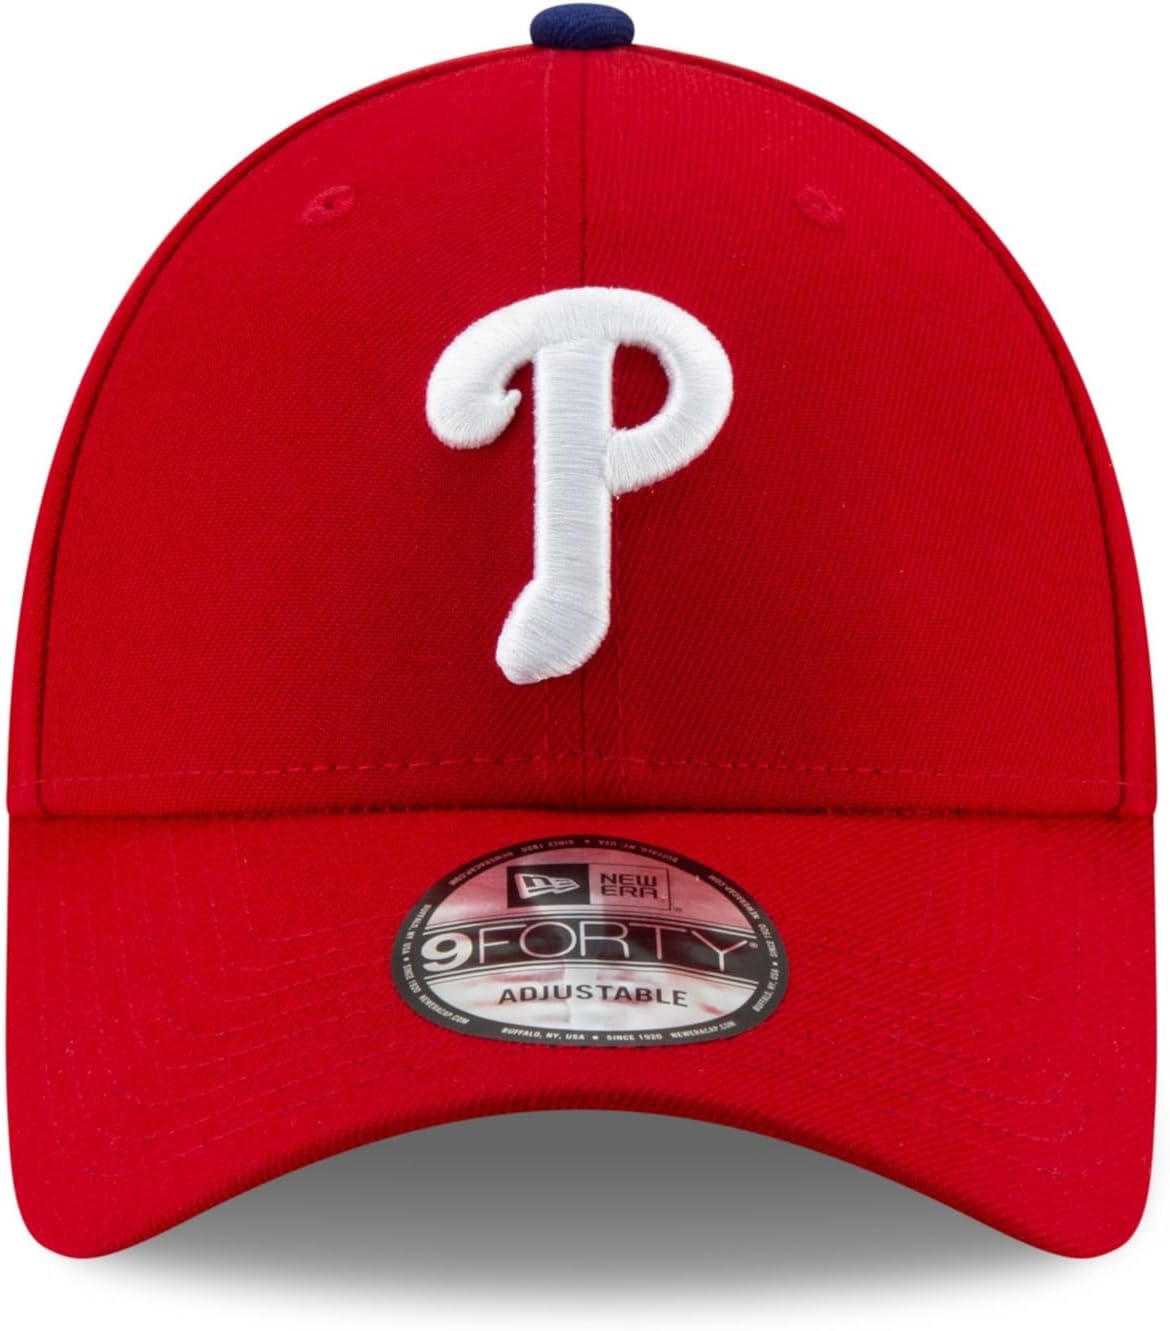 Philadelphia Phillies The League 9FORTY Adjustable Game Cap